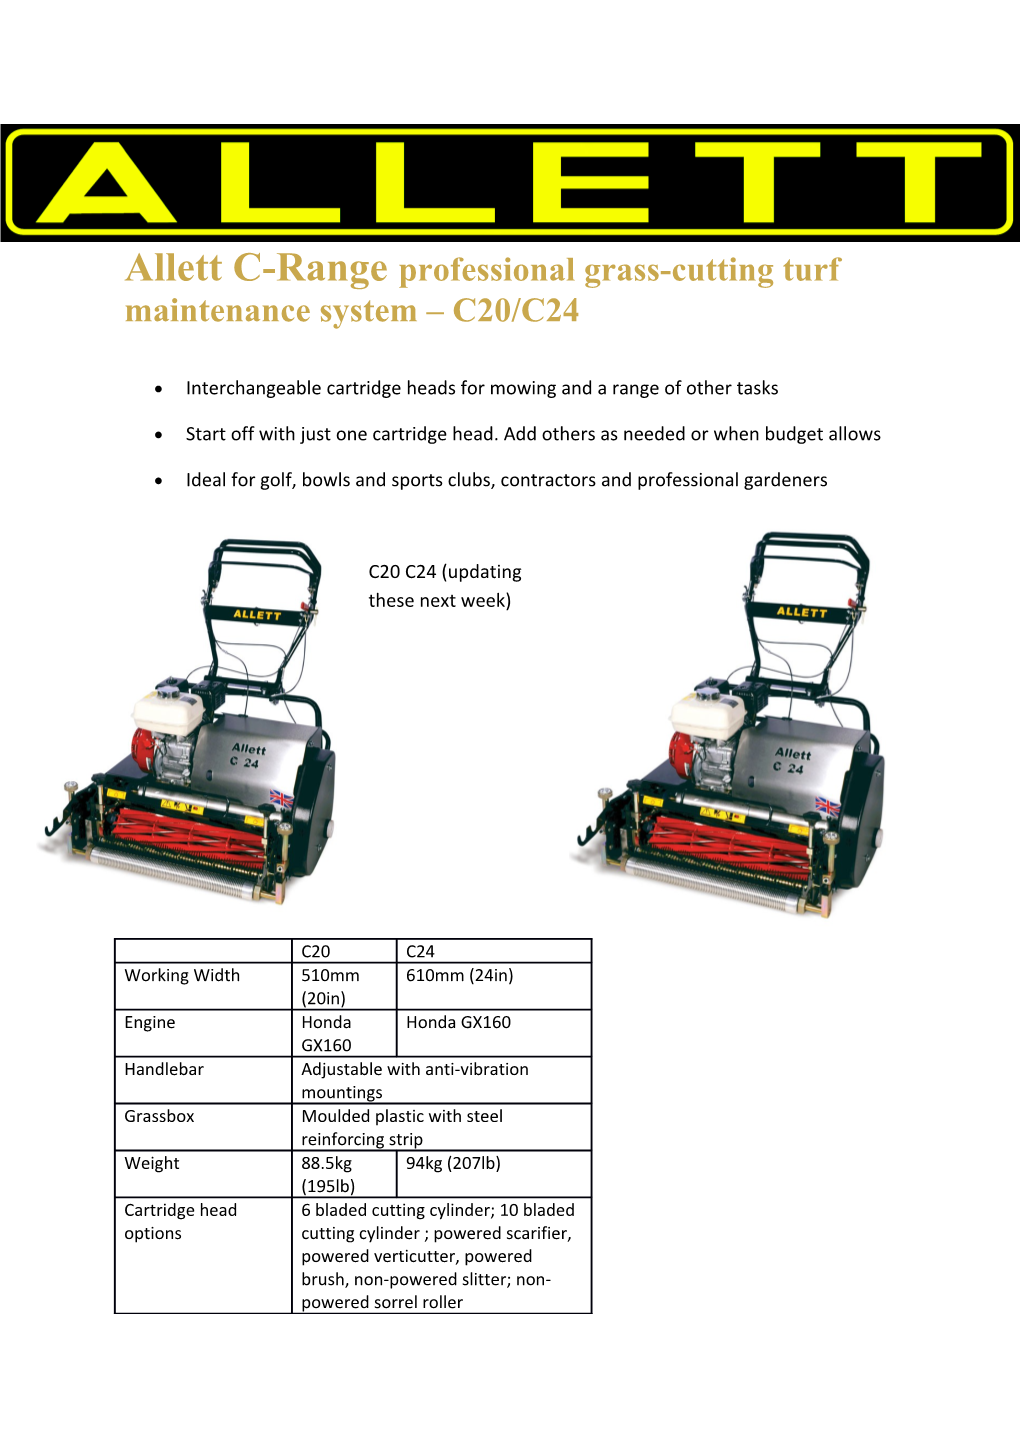 Allett C-Range Professional Grass-Cutting Turf Maintenance System C20/C24